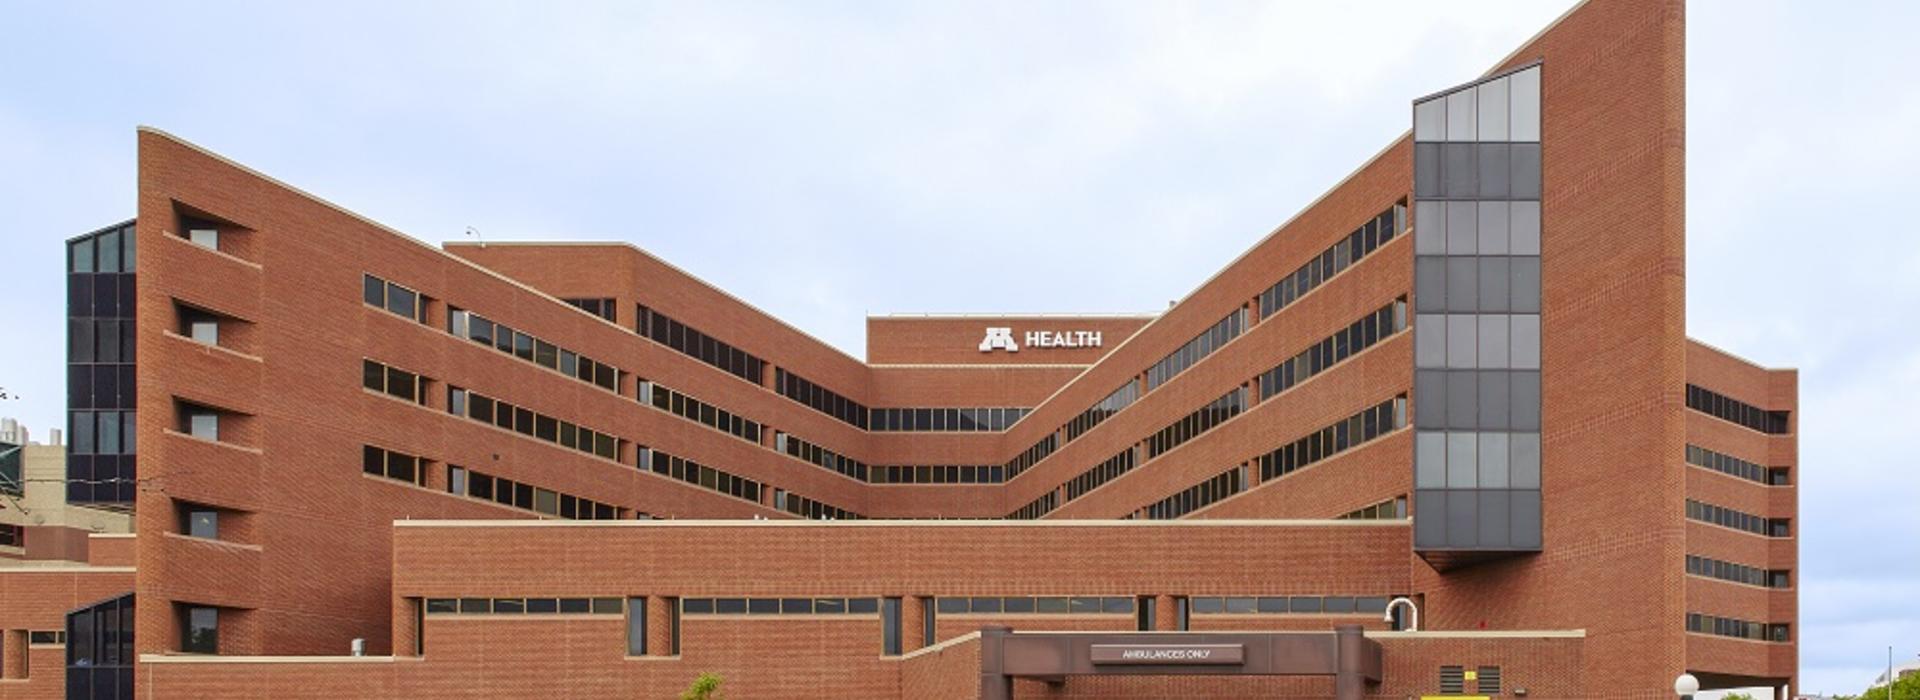 University of Minnesota Medical Center